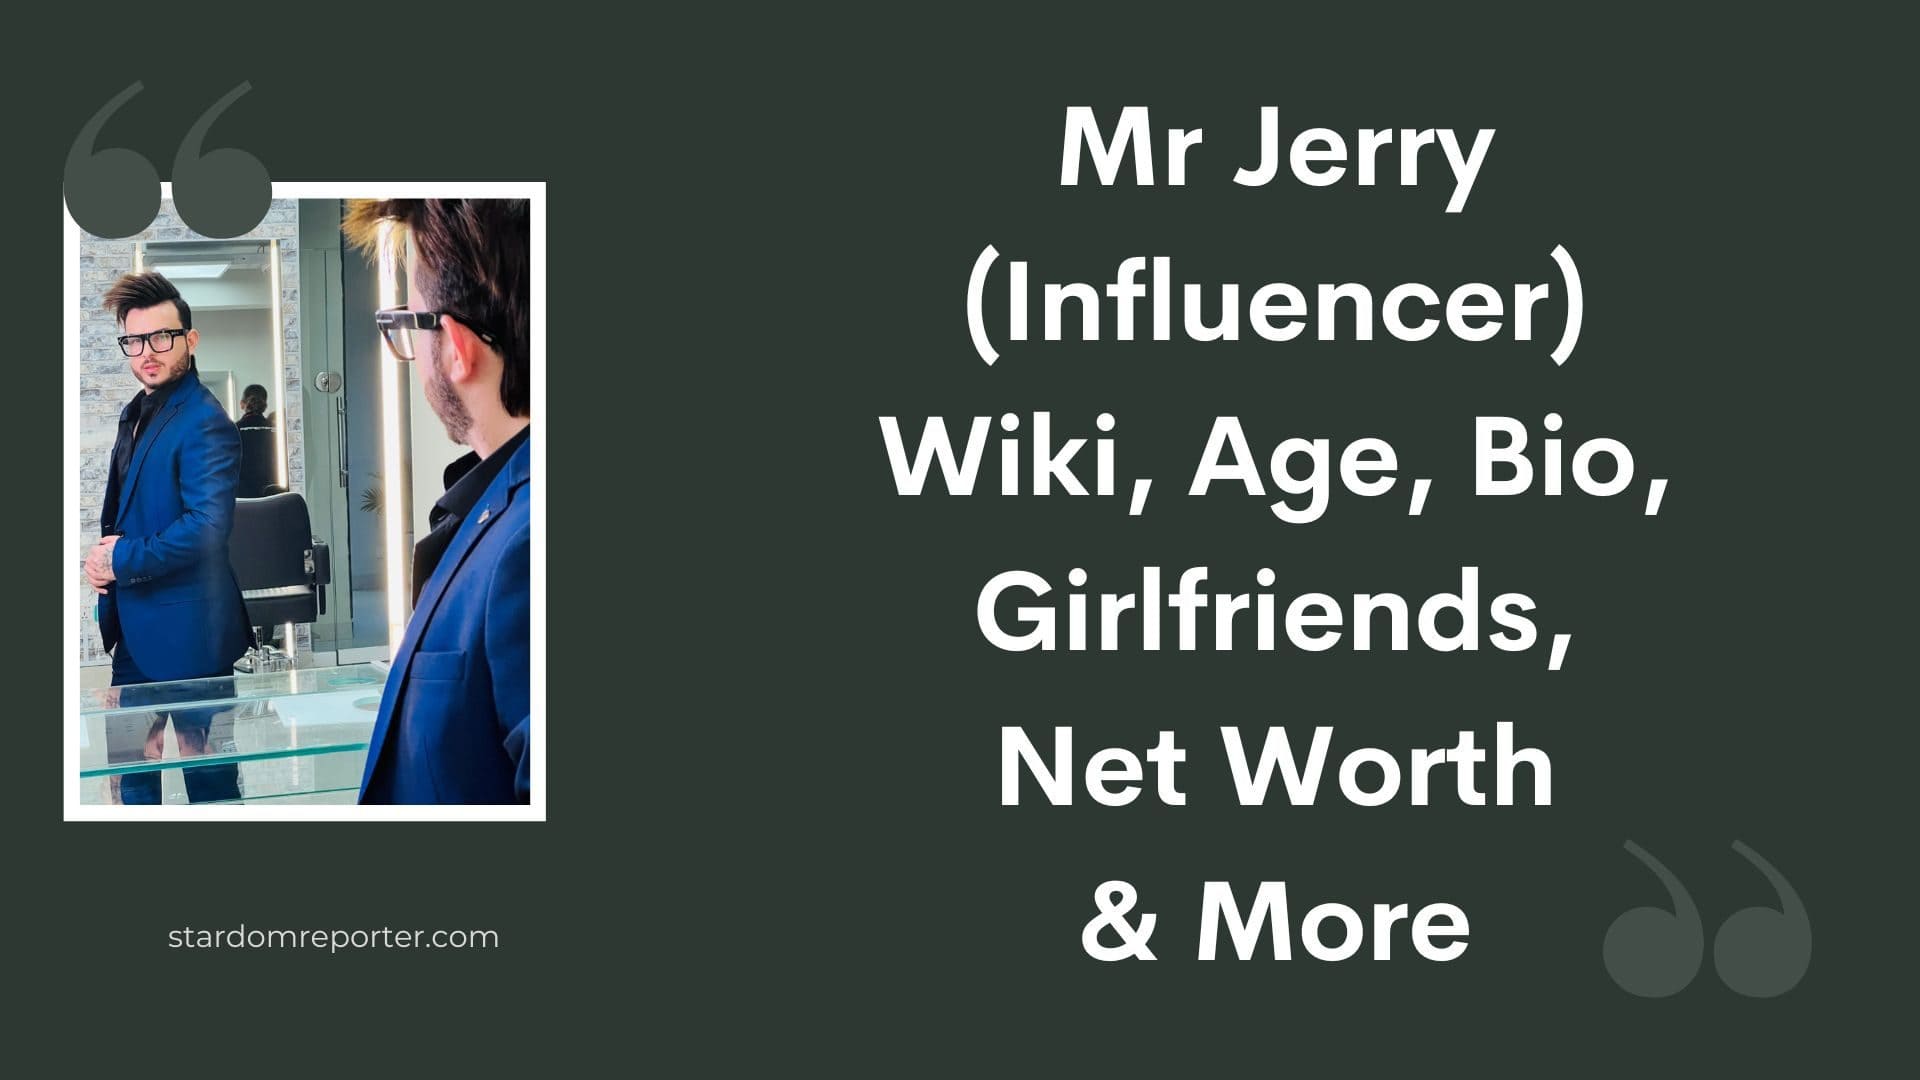 Mr Jerry (Influencer) Wiki, Age, Bio, Girlfriends, Net Worth & More - 25